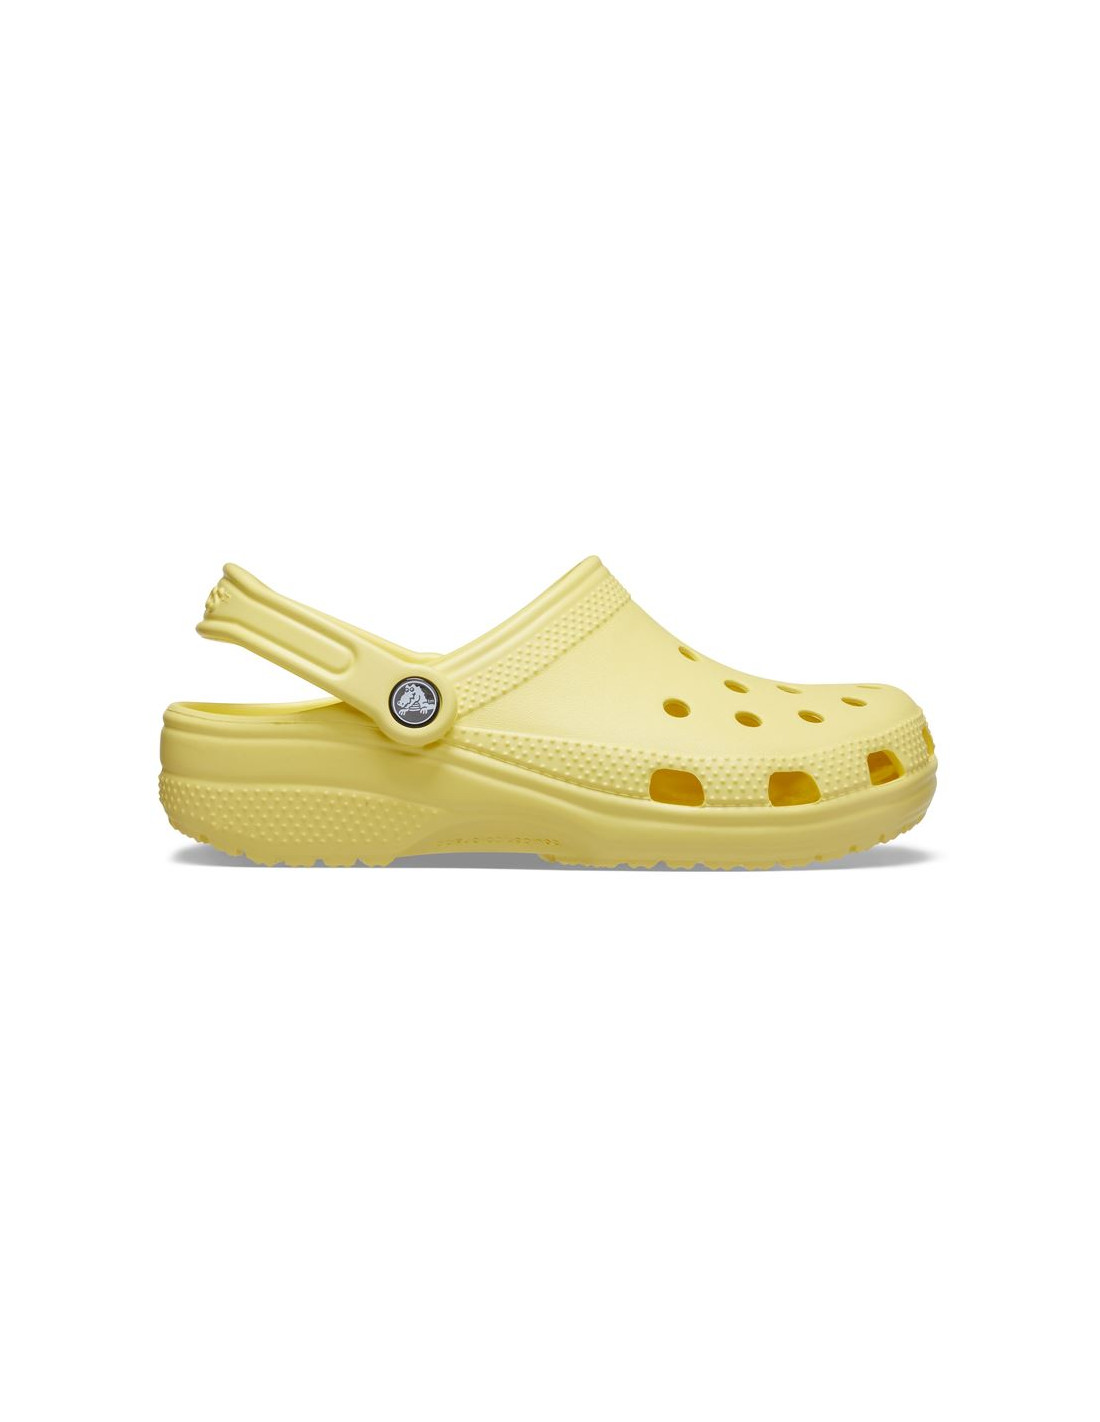 Zuecos crocs classic yellow